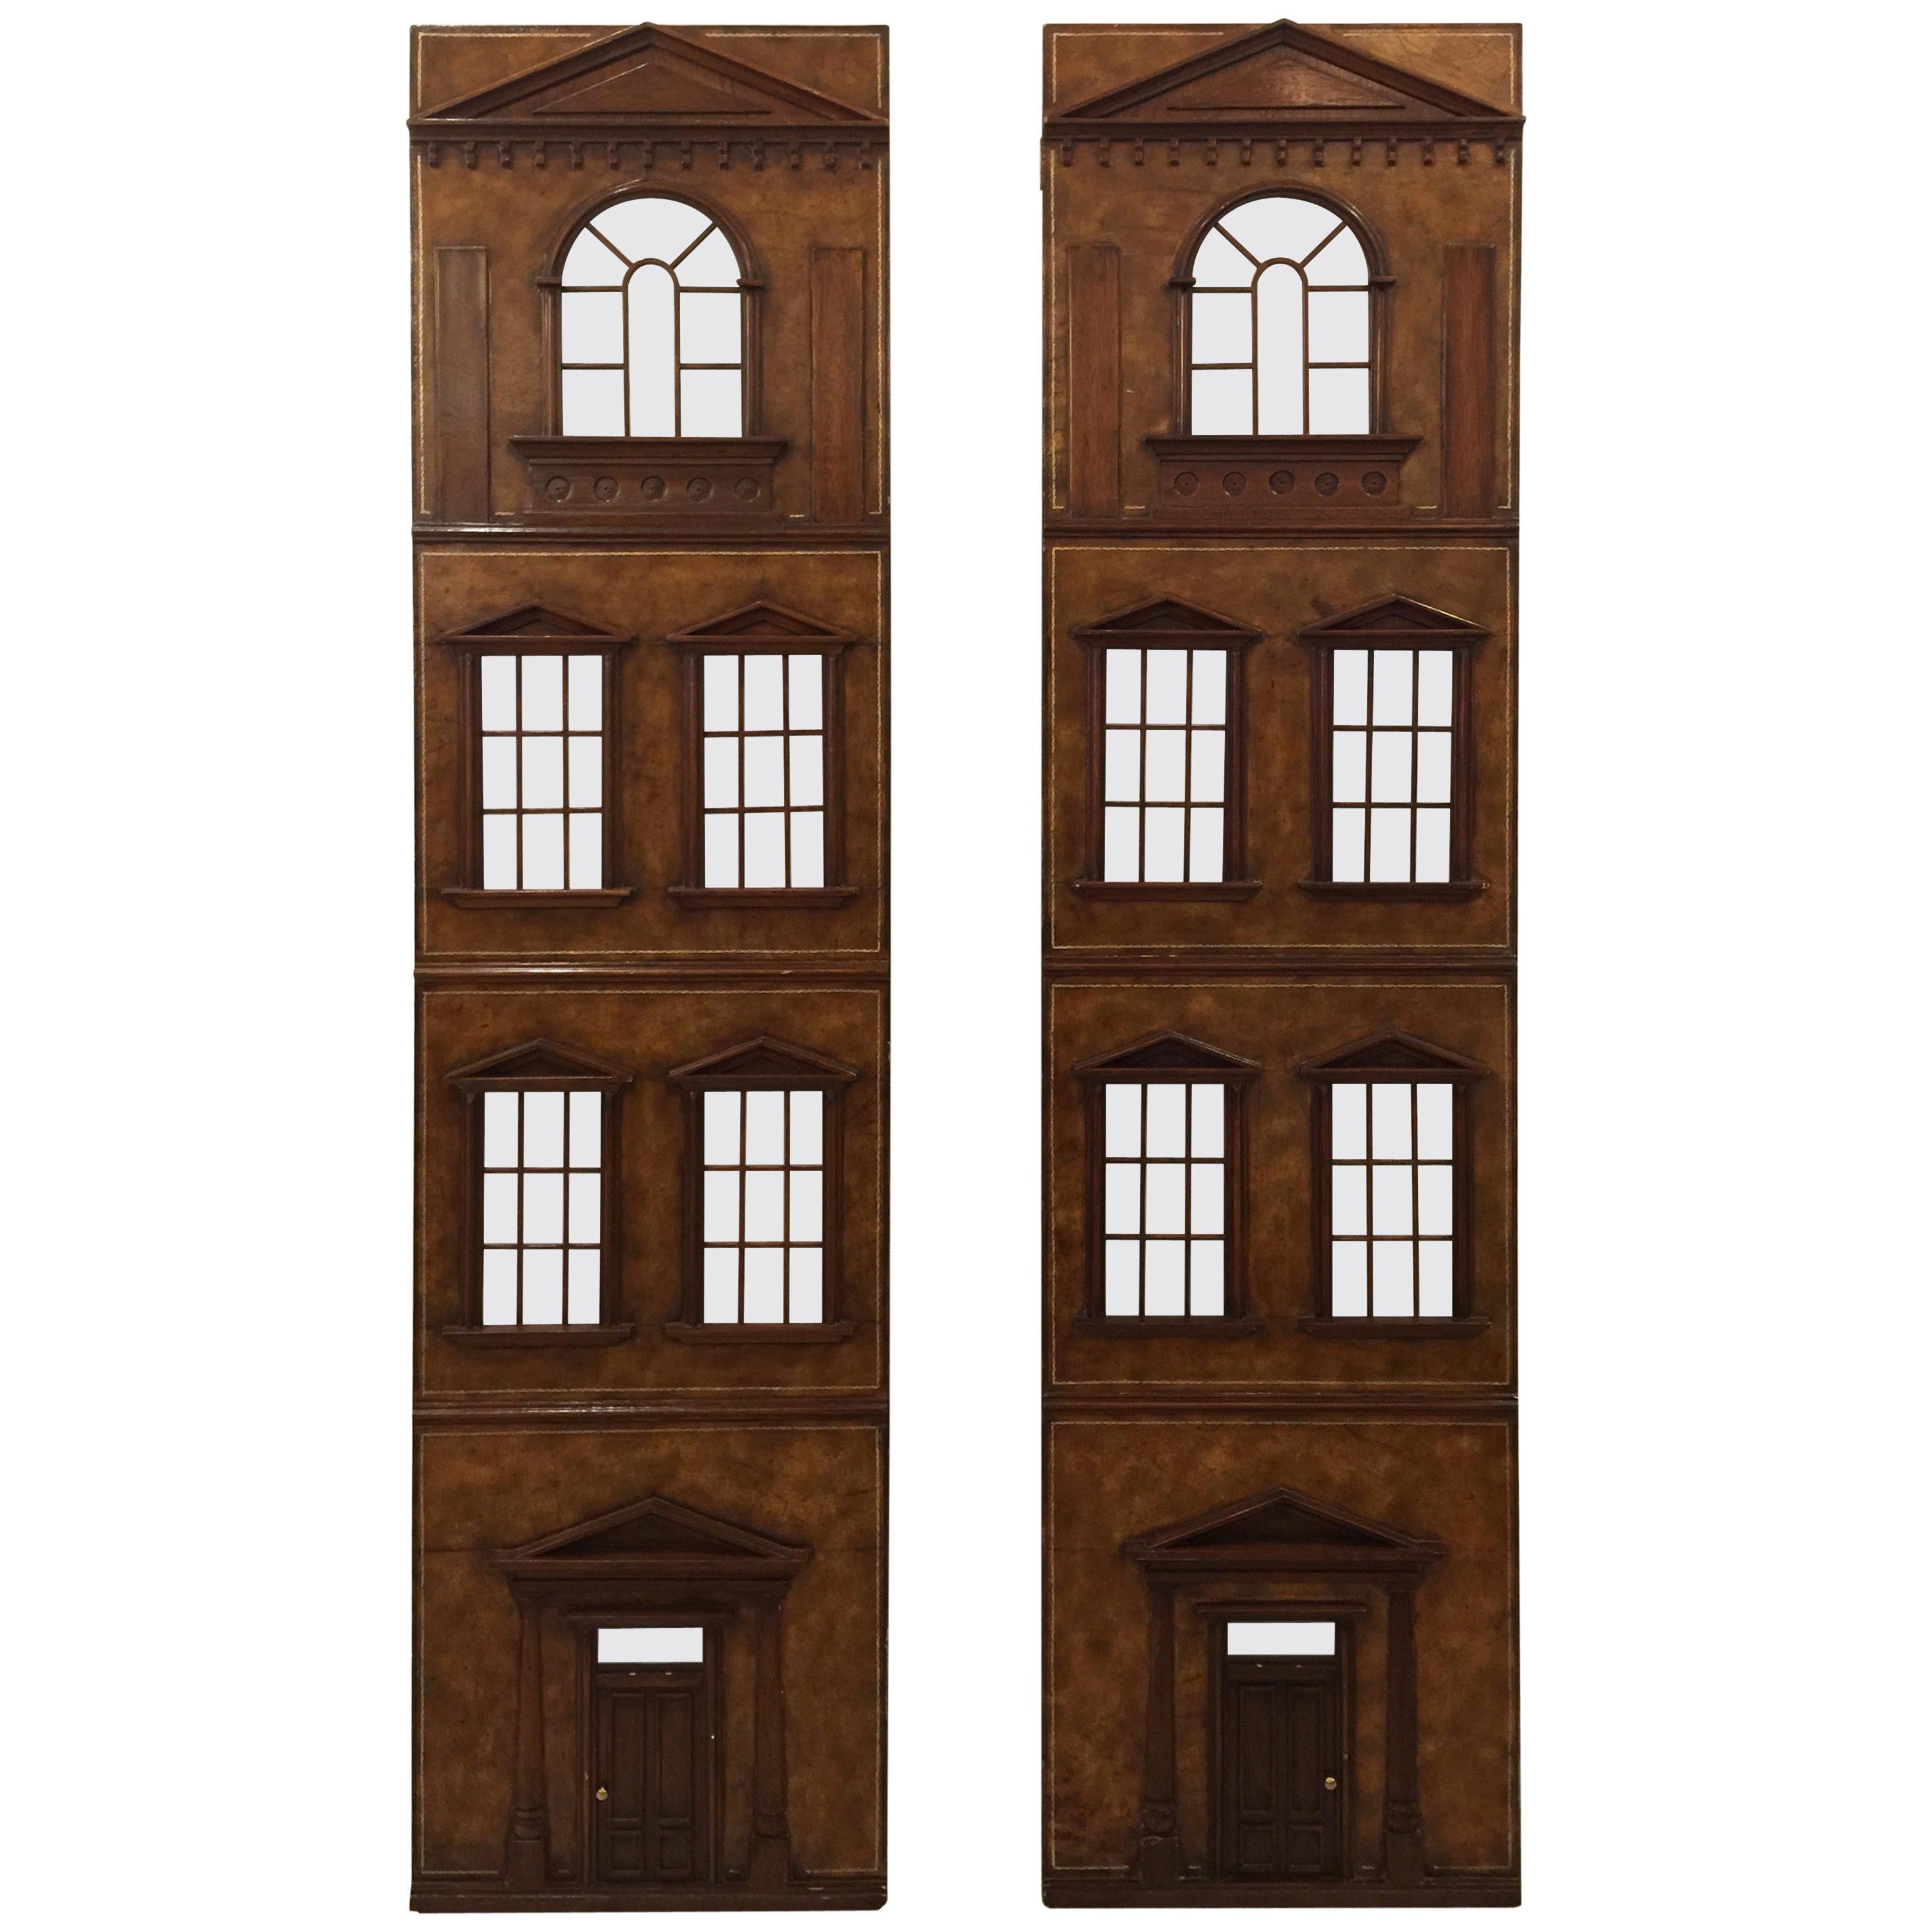 Architectural Building Facade Leather Clad Decorative Doors